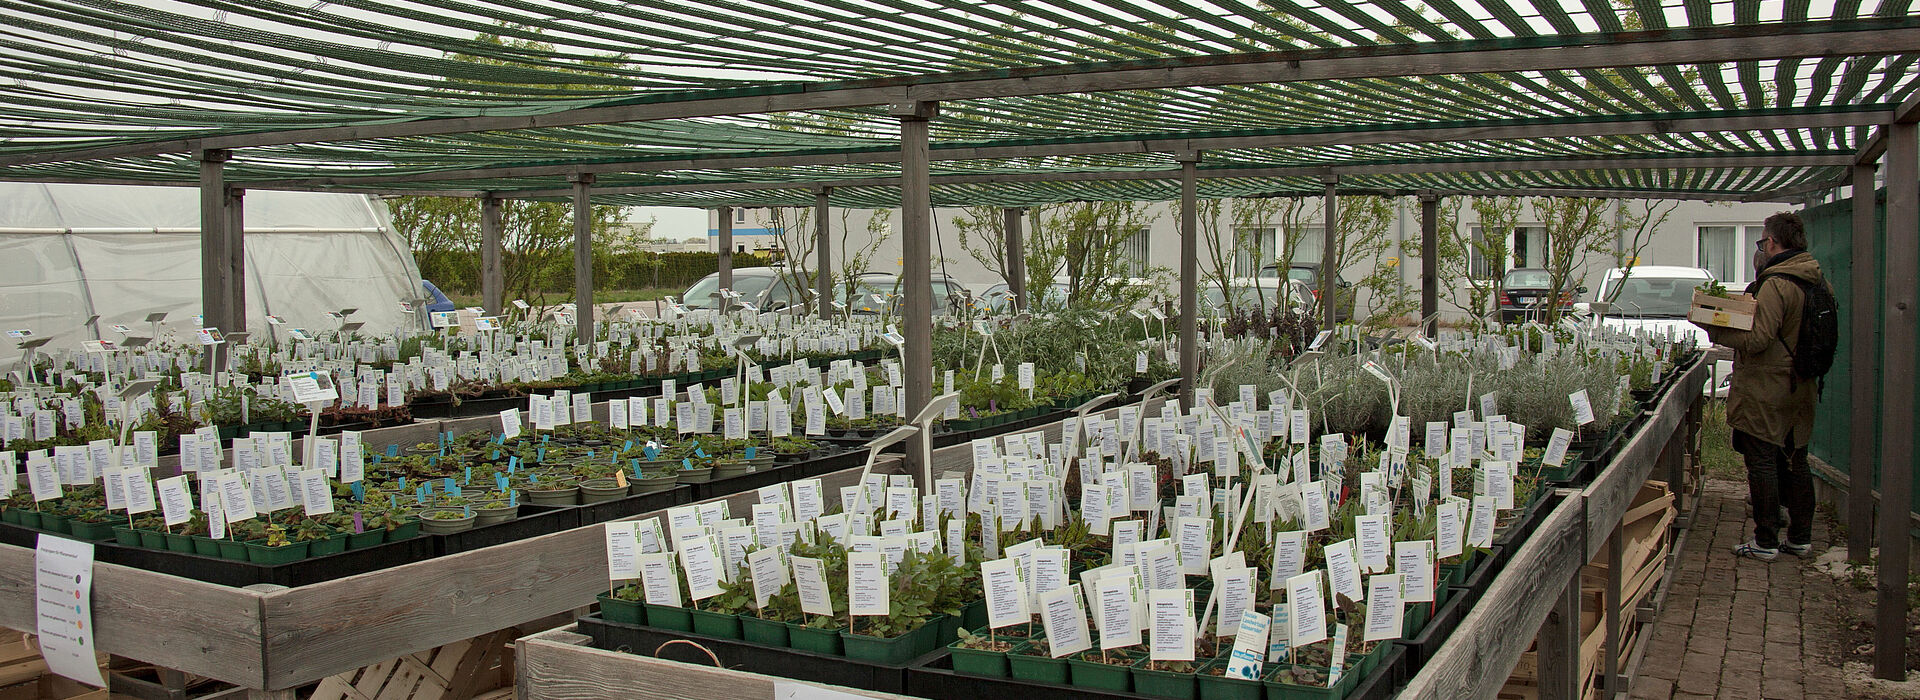 Jungpflanzen bei WUK bio.pflanzen